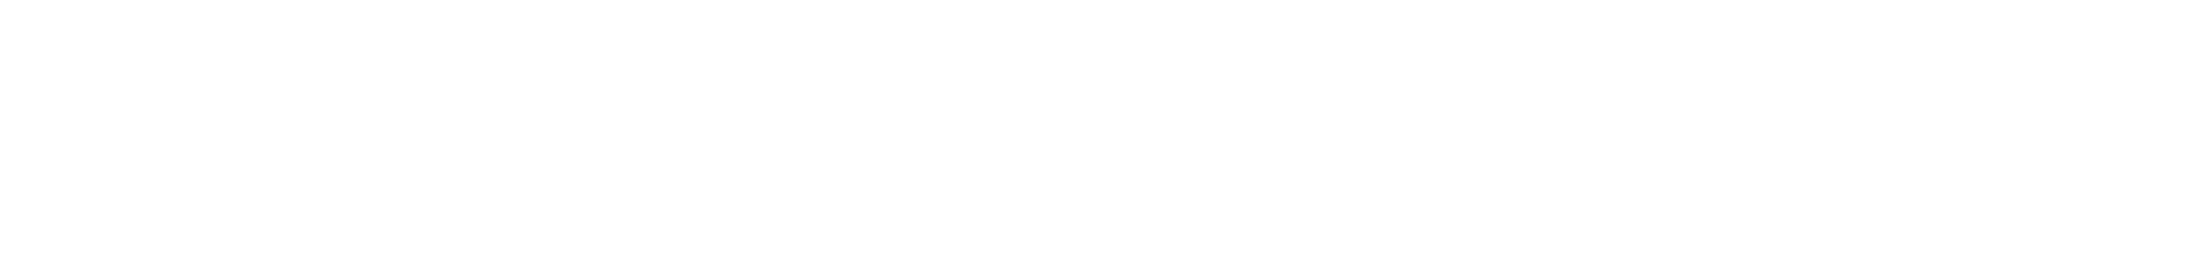 J&ansovyj Mir Logo Black And White - Wordpress Logo White Png (2400x2400), Png Download